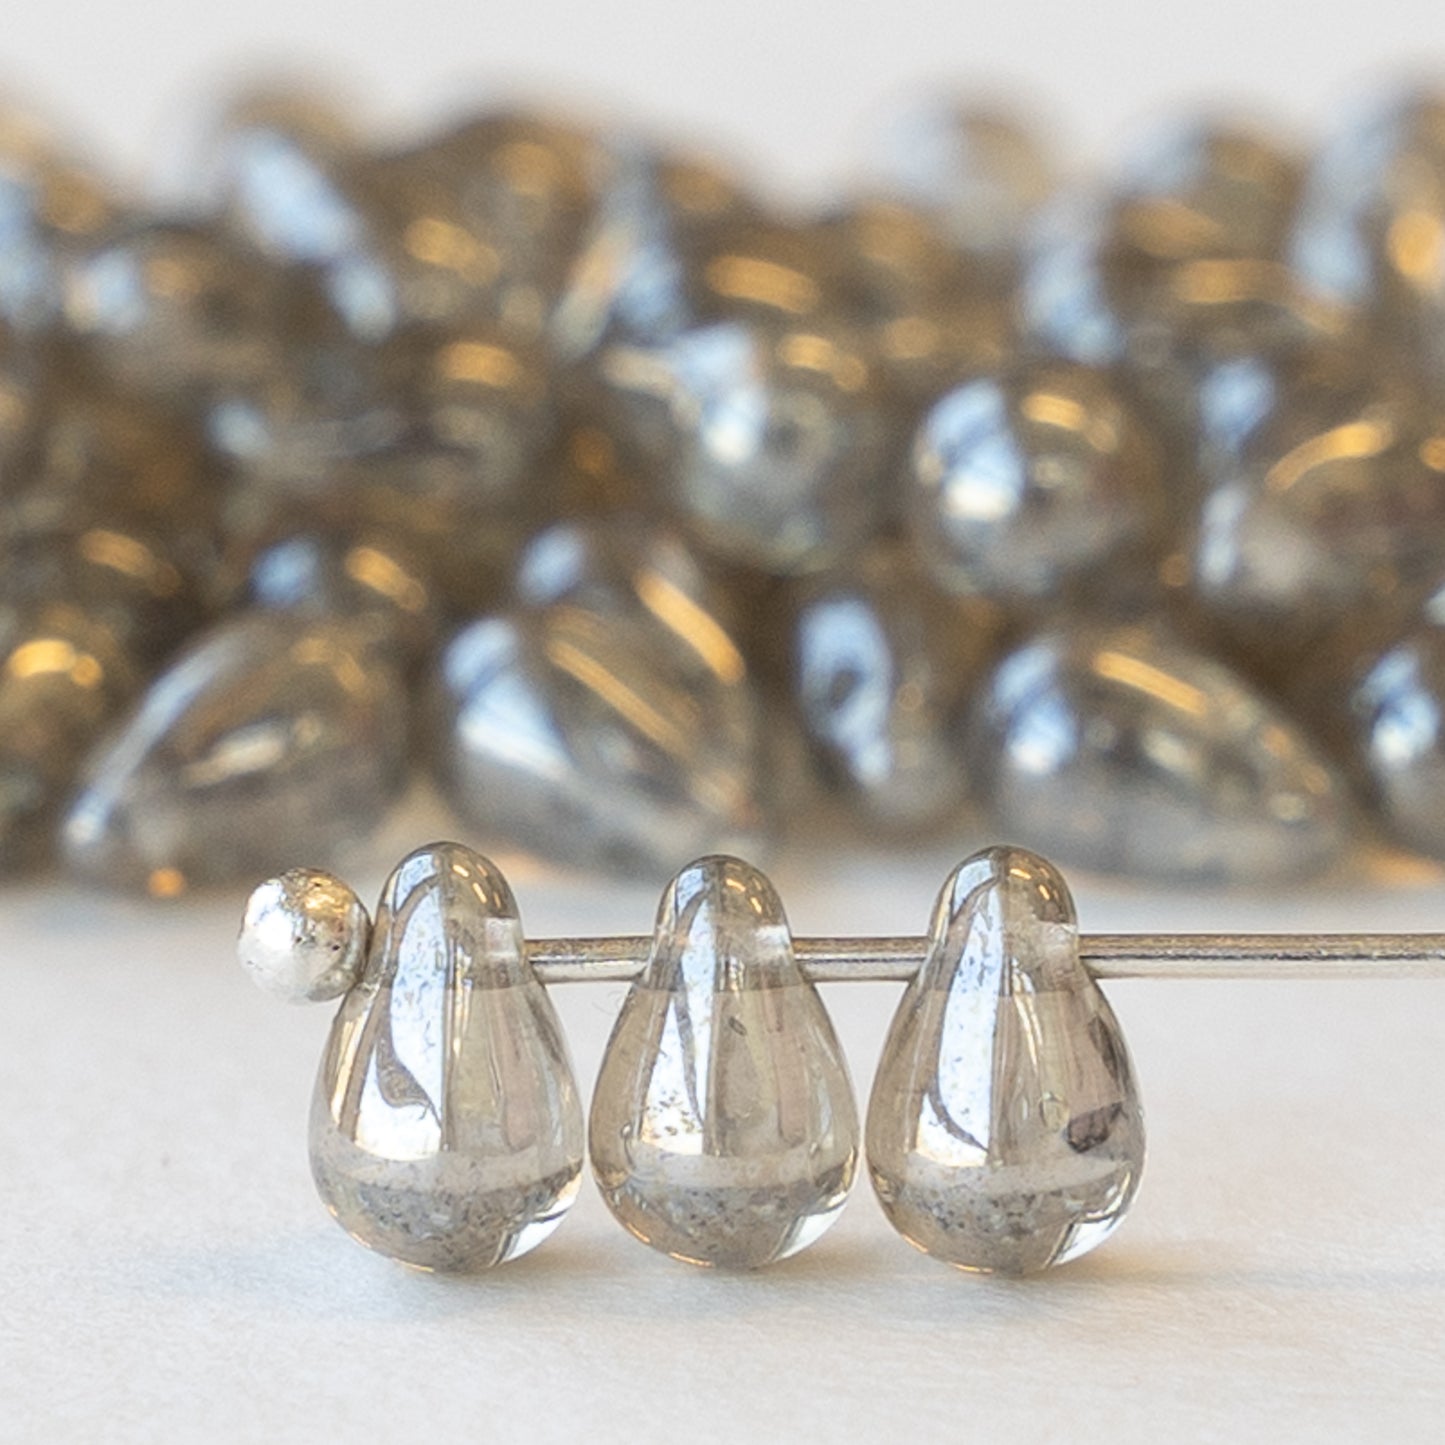 4x6mm Glass Teardrop Beads - Black Diamond Luster - 100 Beads